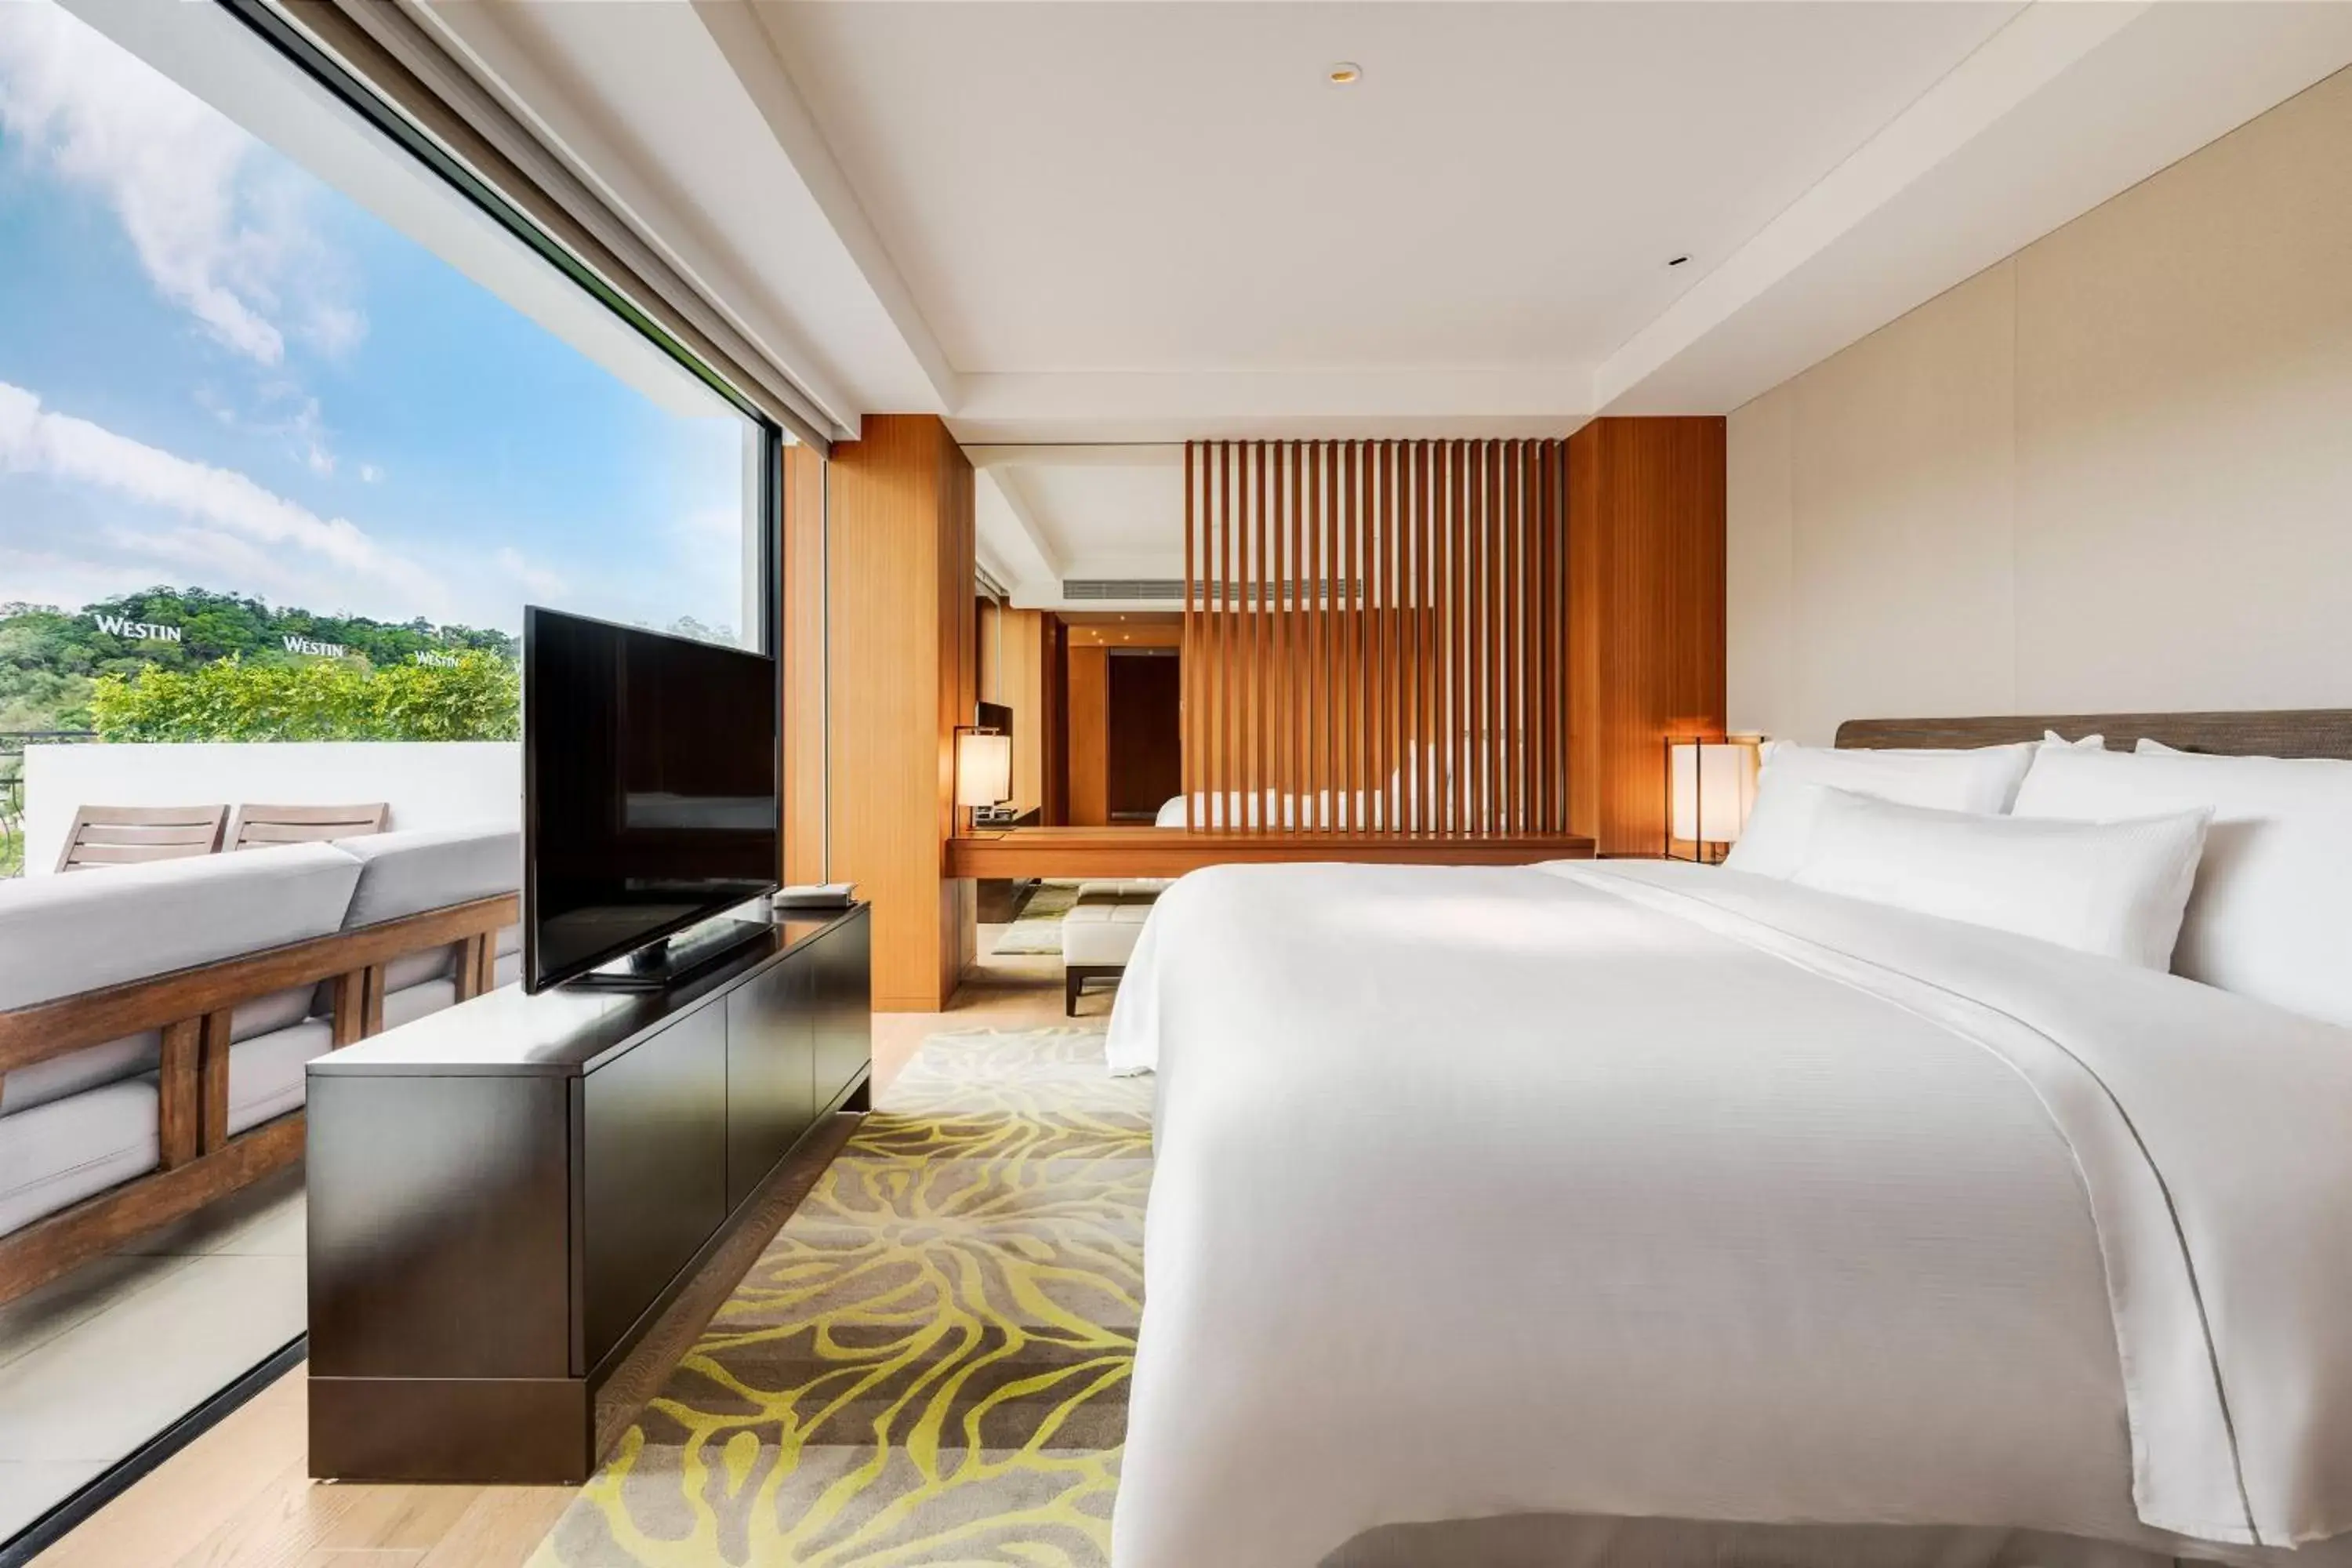 Bedroom, TV/Entertainment Center in The Westin Tashee Resort, Taoyuan